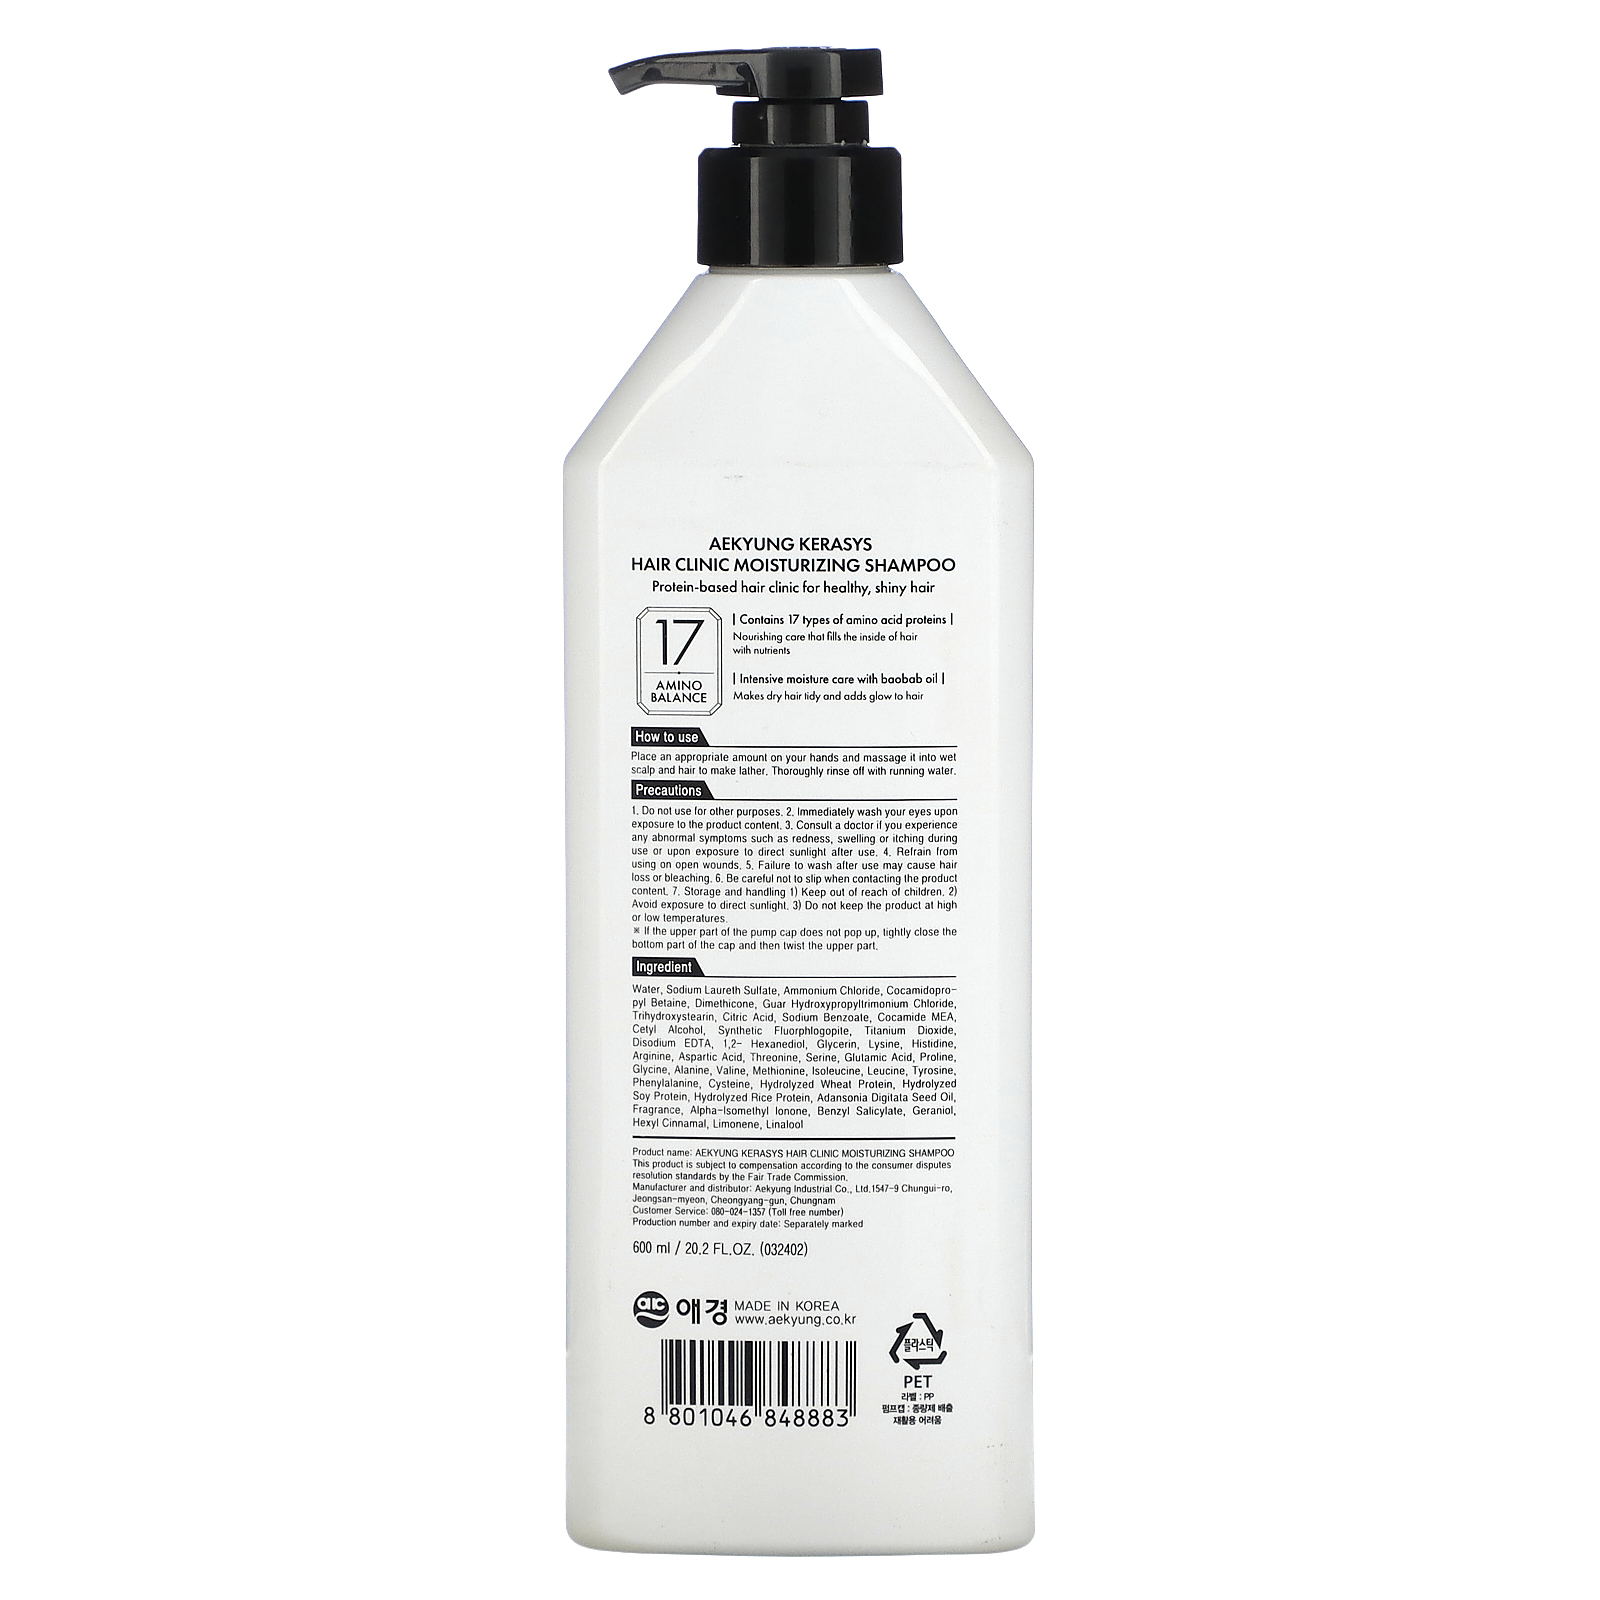 szampon kerasys hair clinic moisturizing shampoo